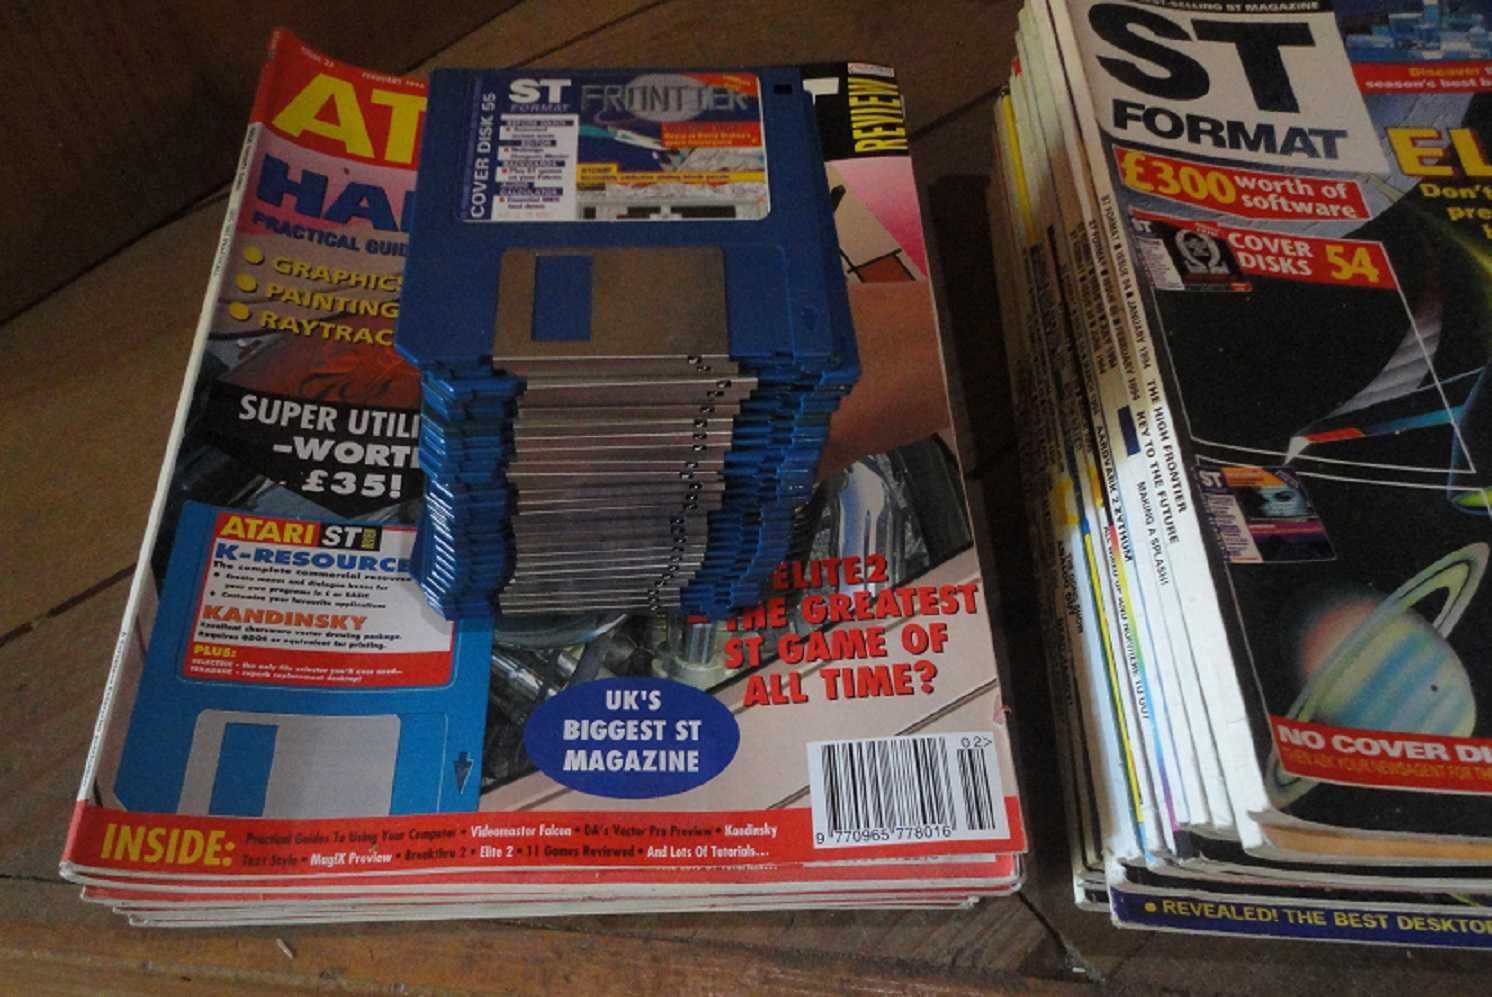 33 revistas Atari com Disketes